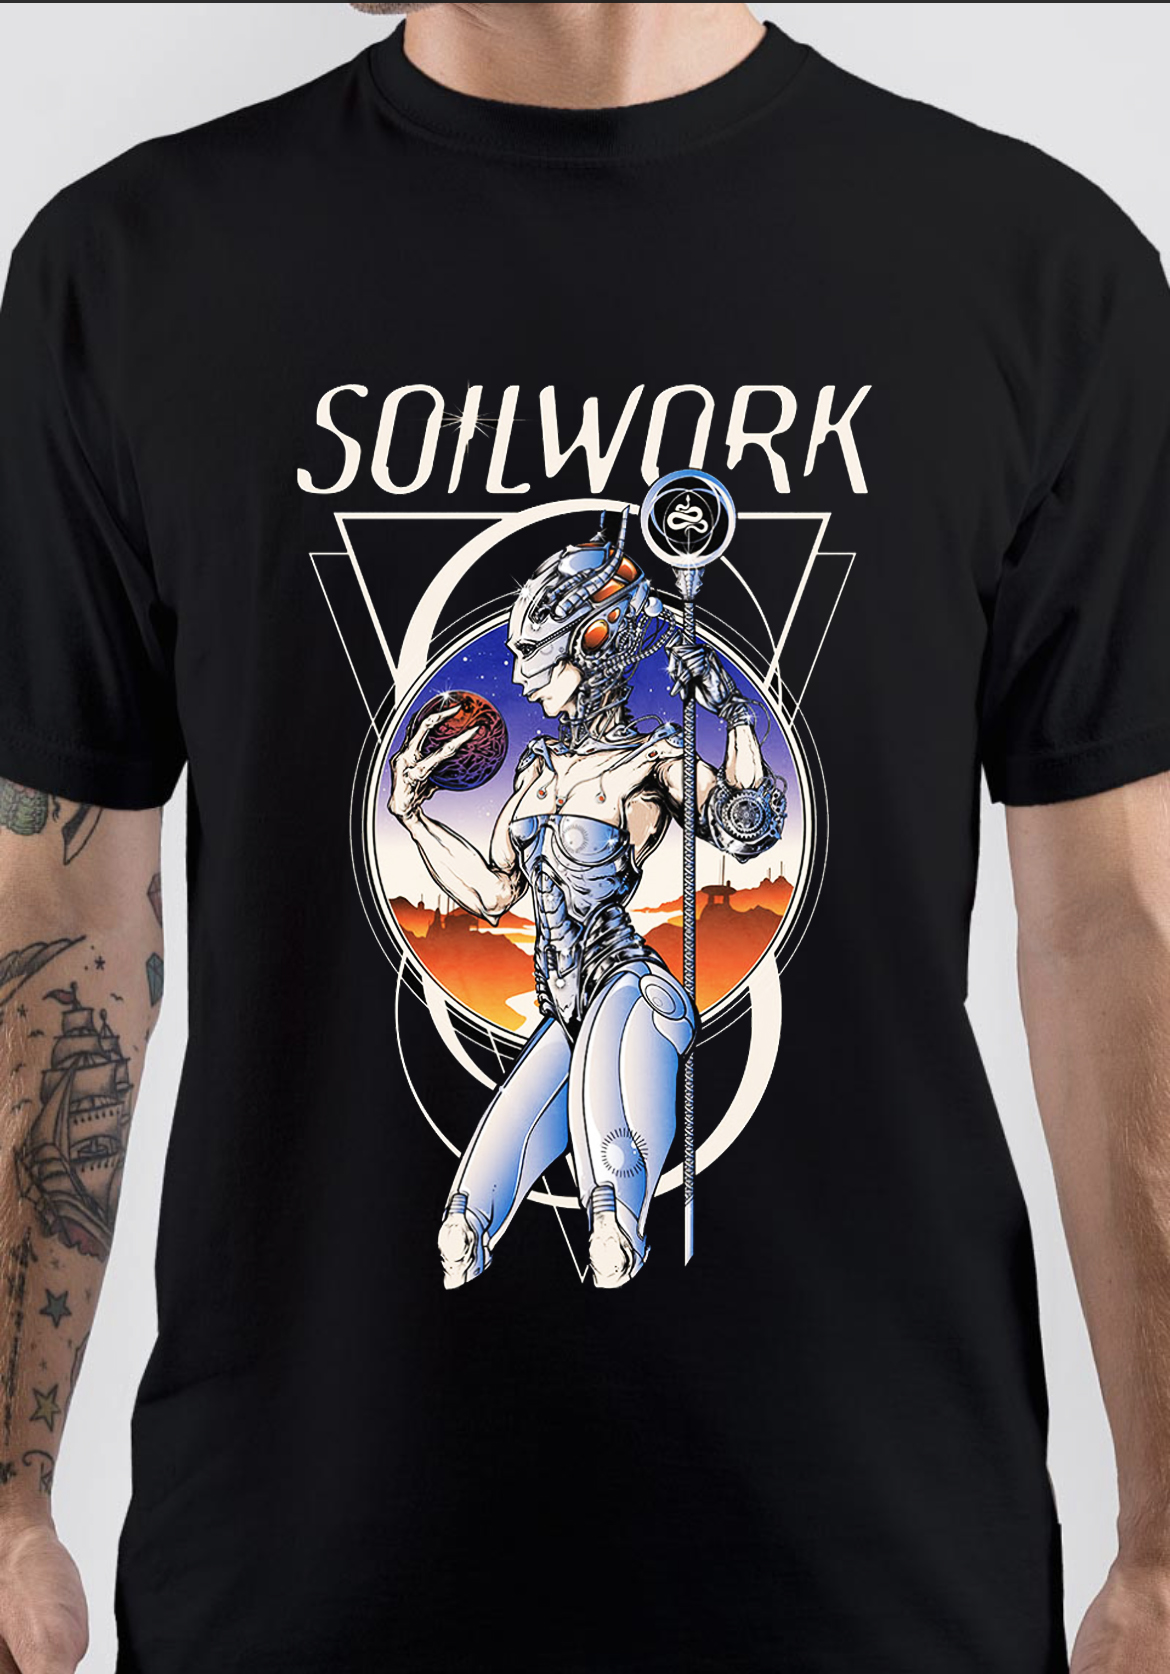 Soilwork T-Shirt And Merchandise